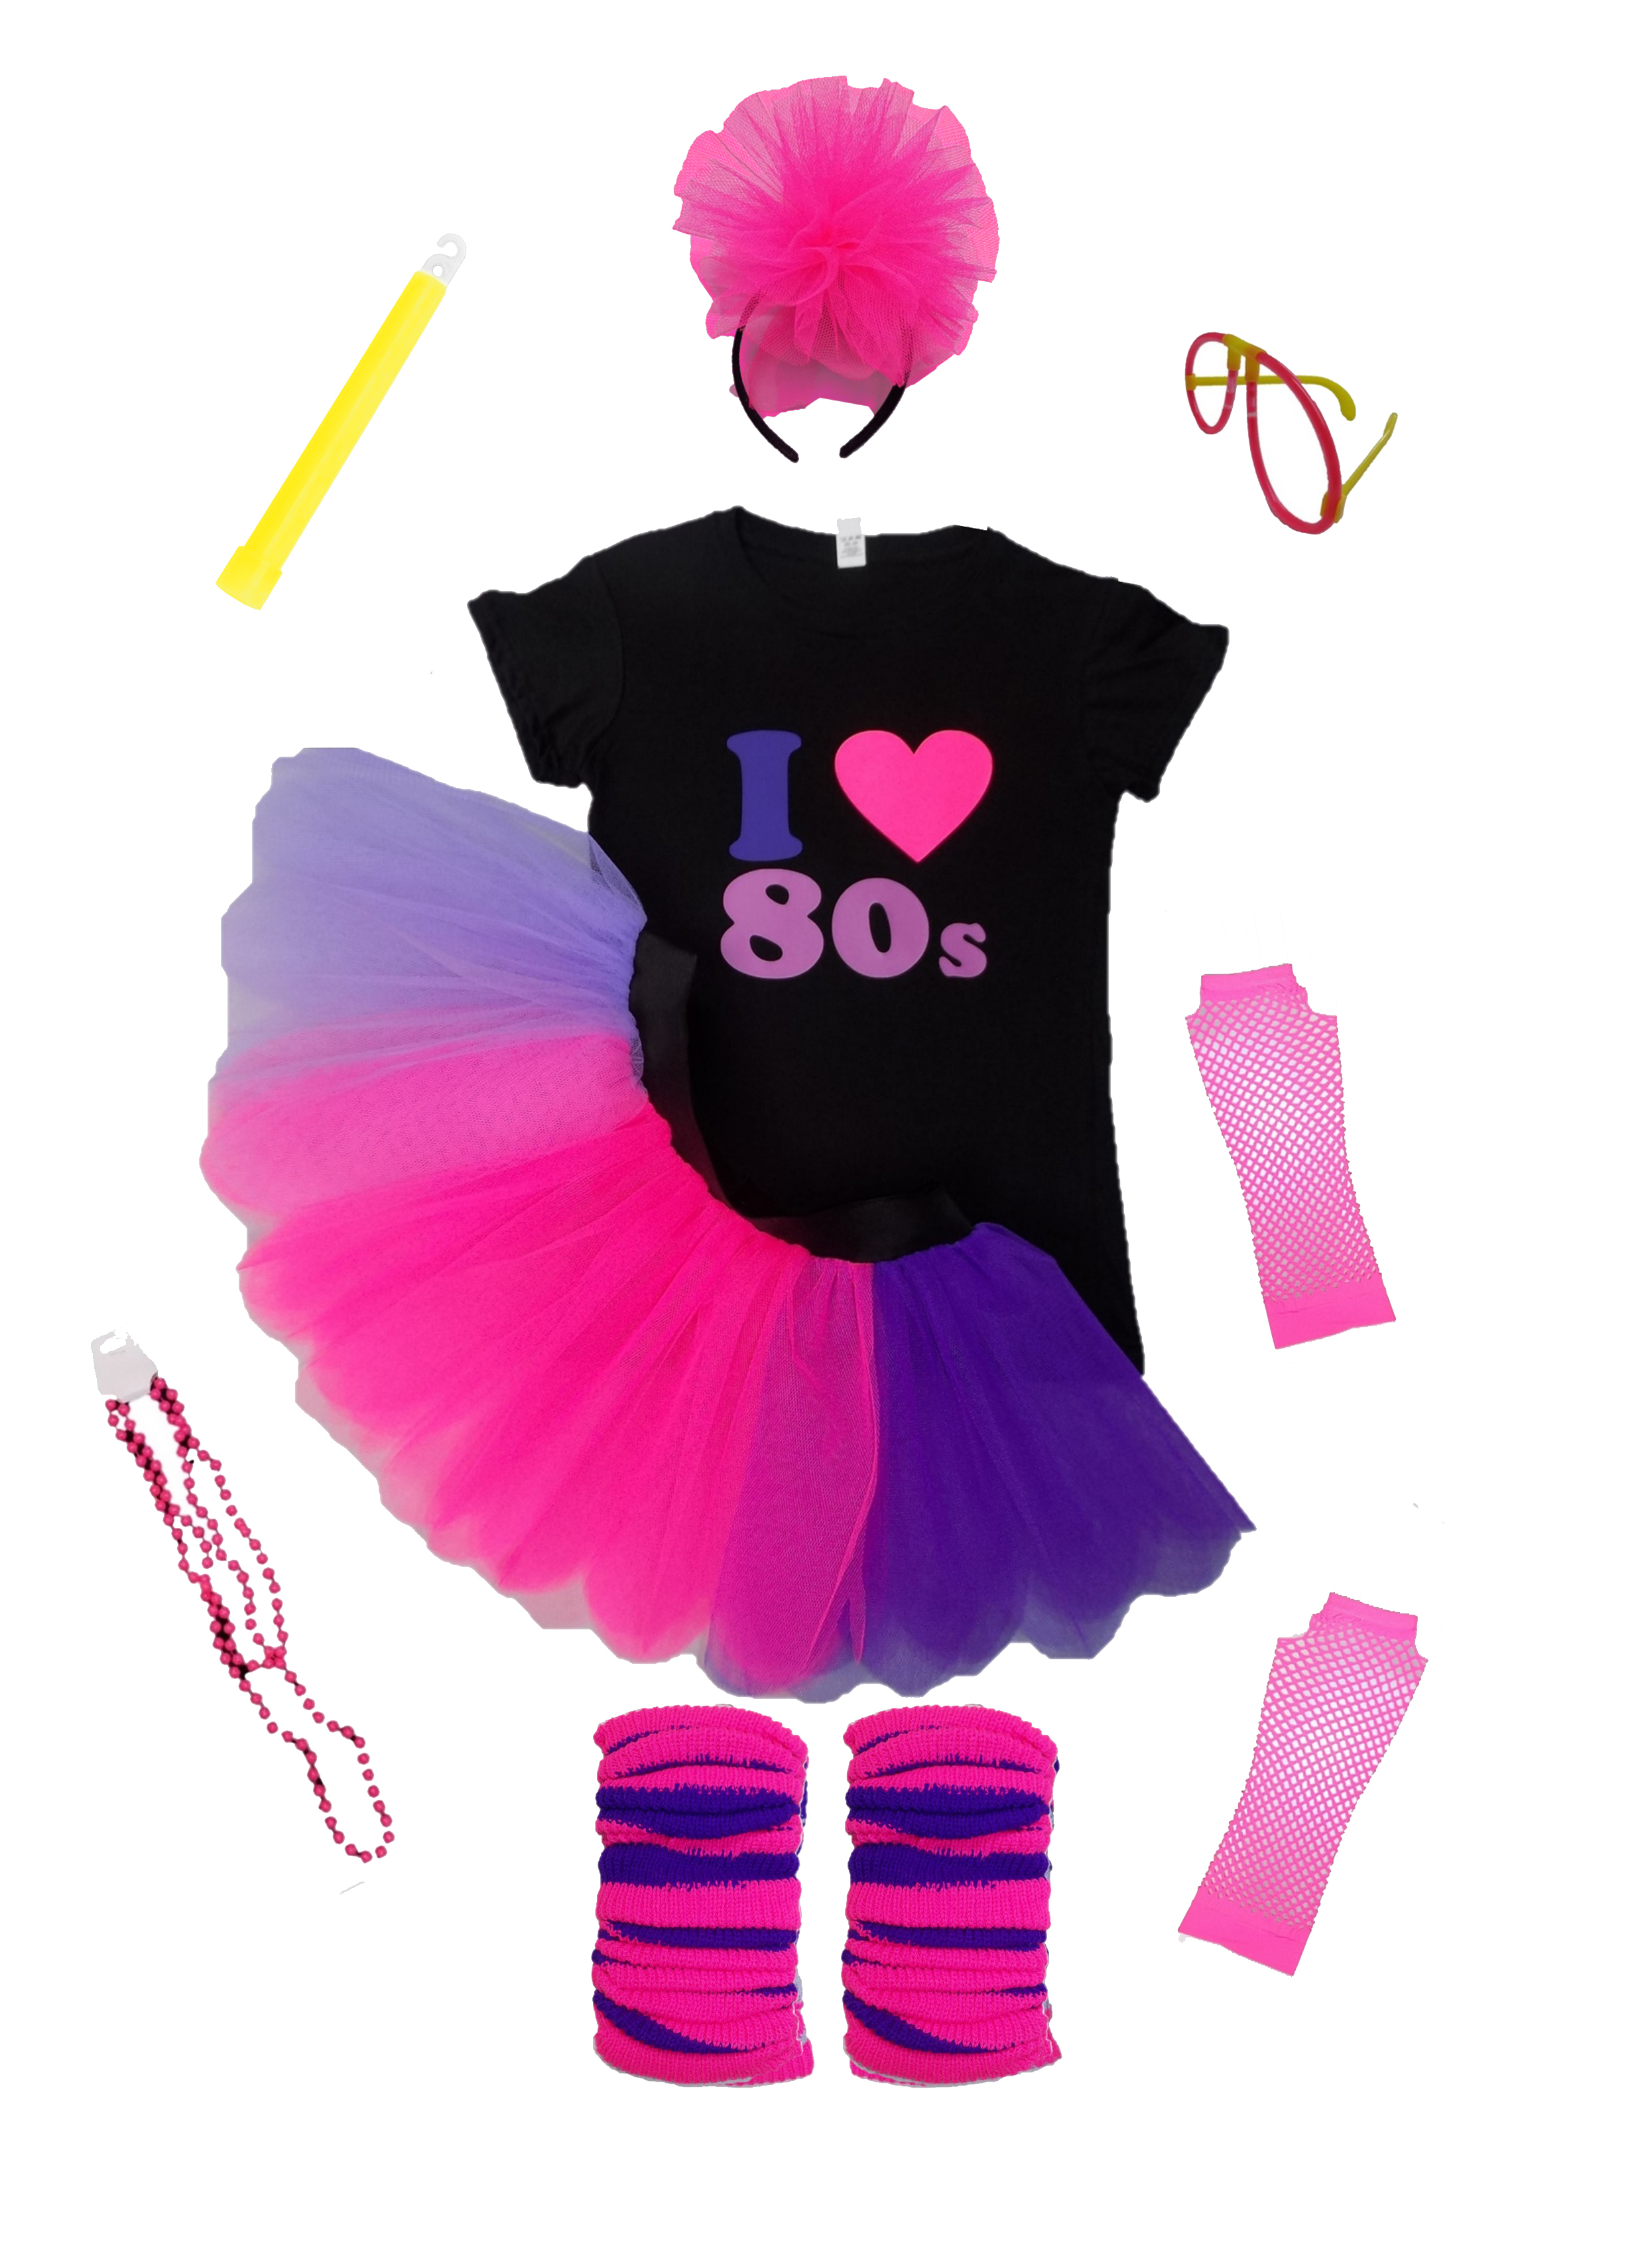 NEON PINK TUTU SKIRT I LOVE 80S FANCY DRESS HEN PARTY FUN RUN UV CLUB FESTIVAL 